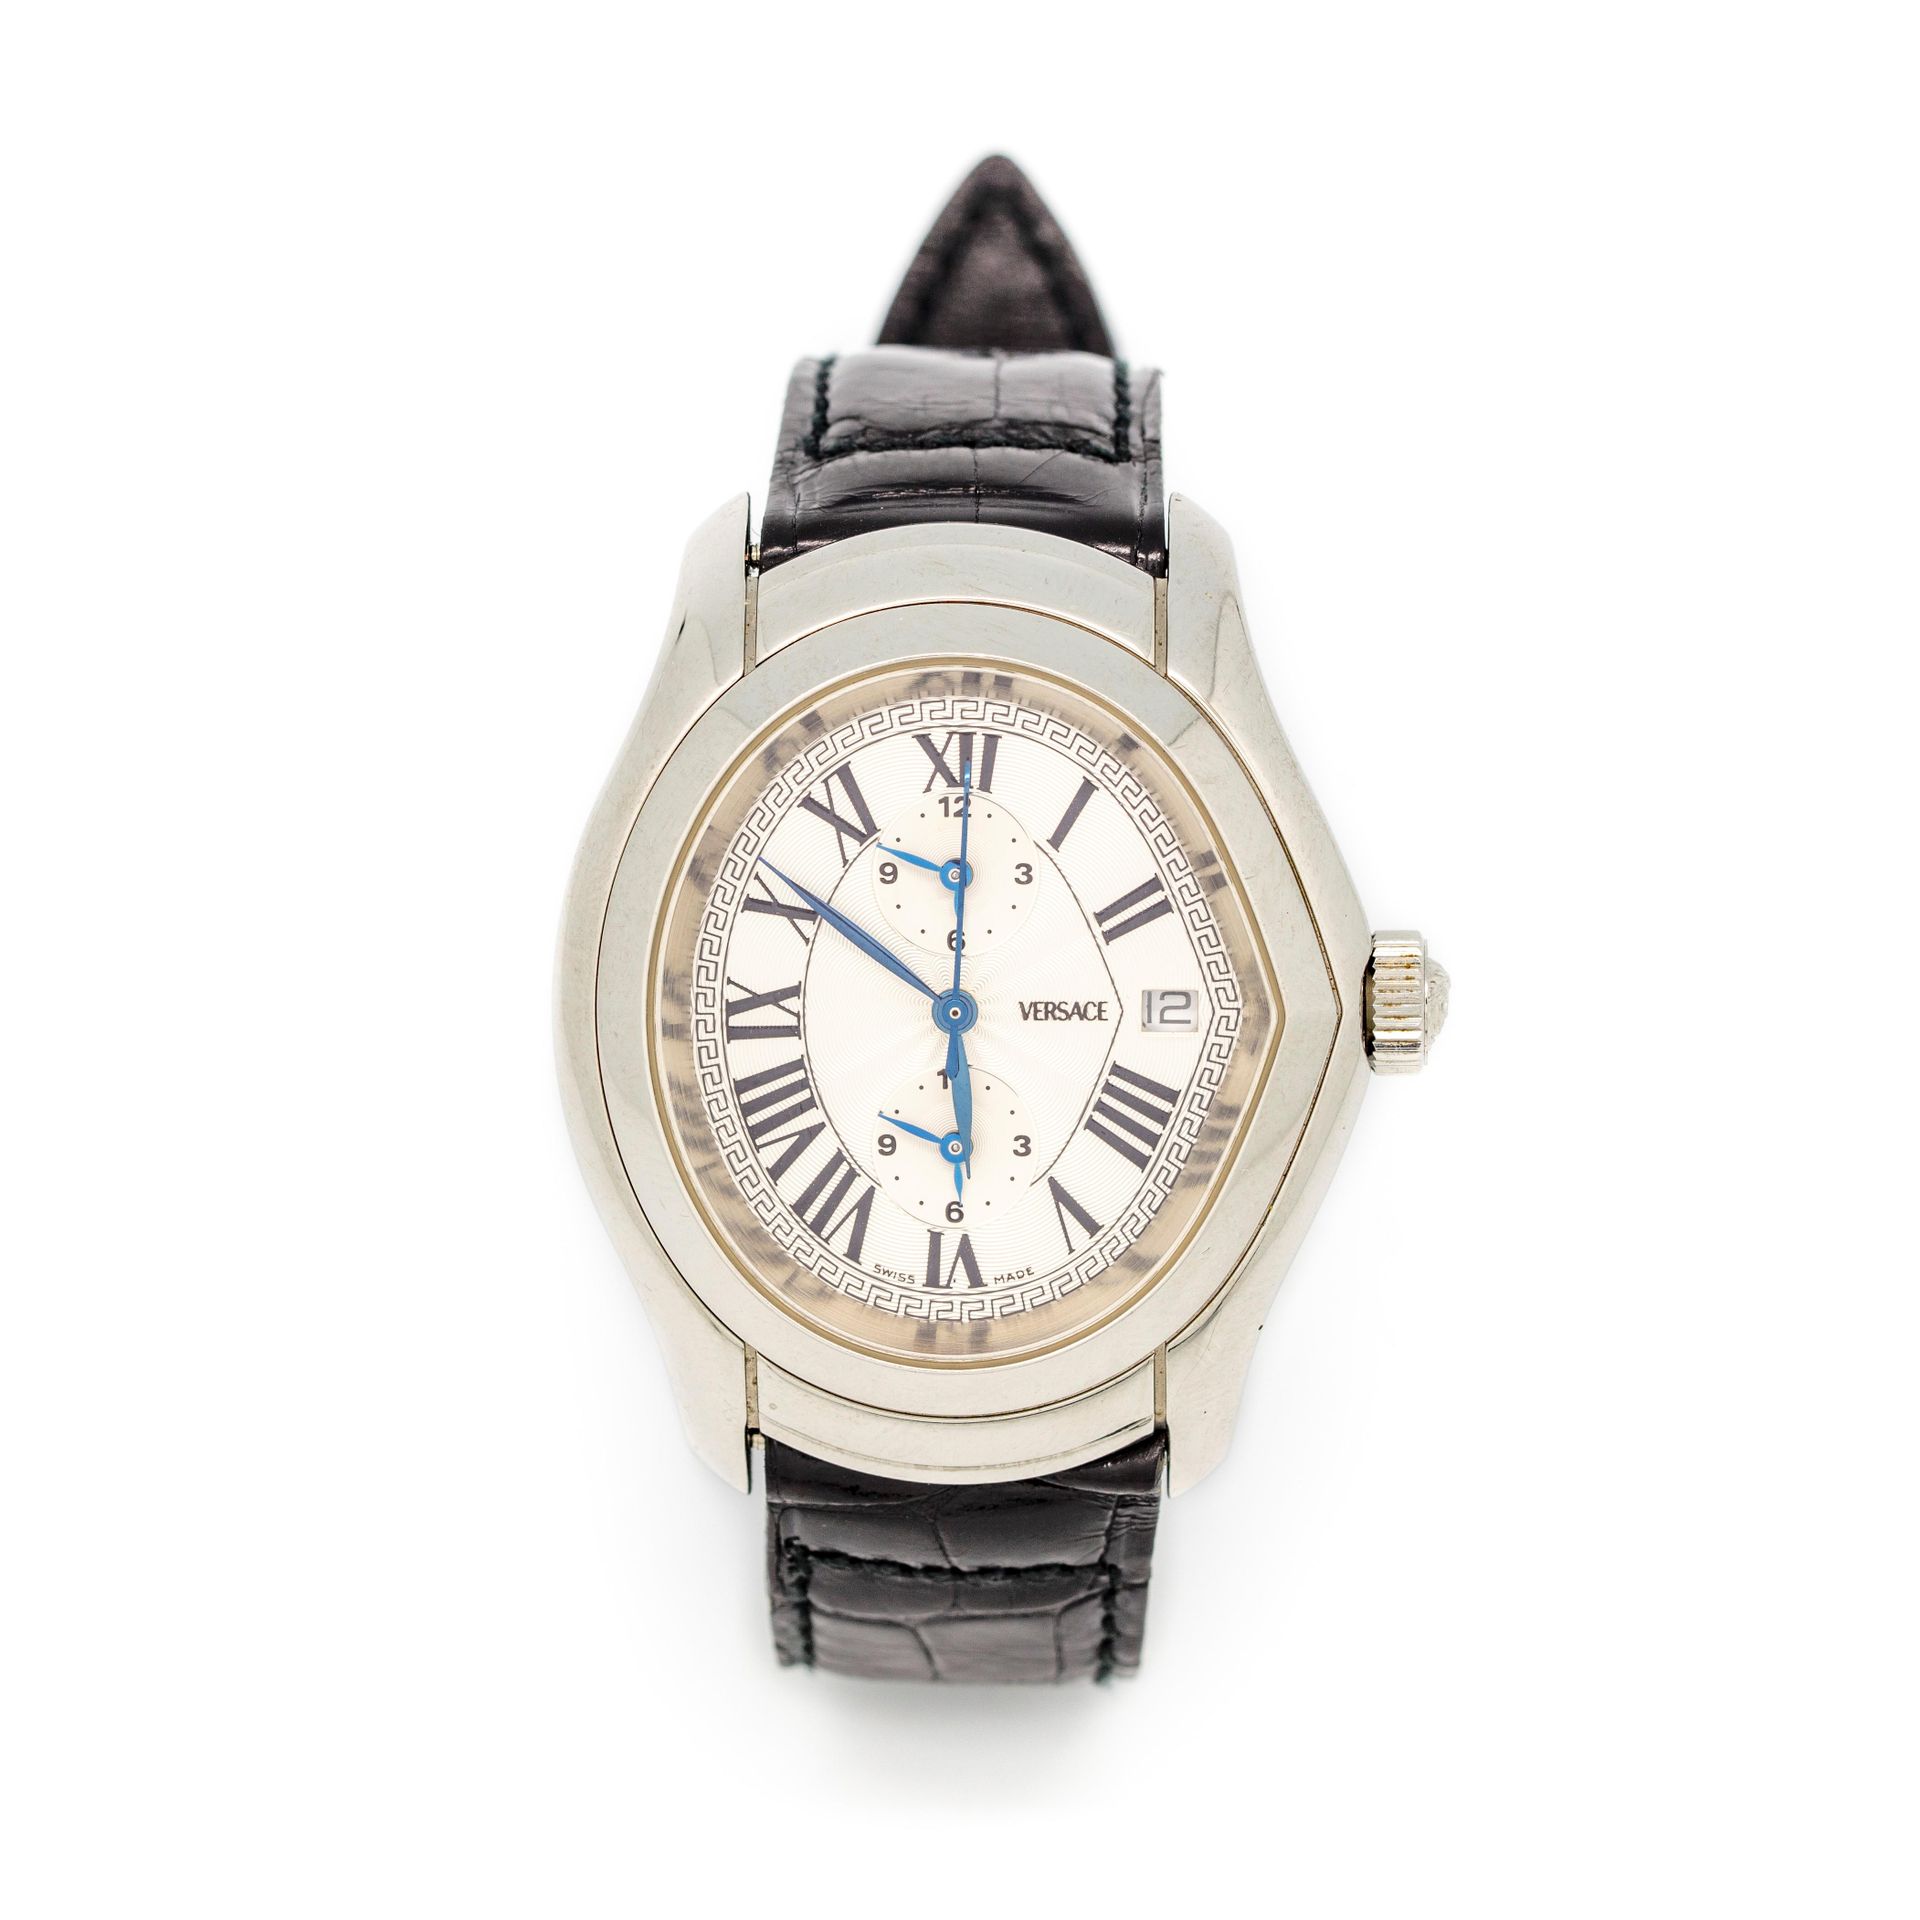 VERSACE Gianni VERSACE

Stahl-Chronographen-Armbanduhr n° 076/250 - Weißes Ziffe&hellip;